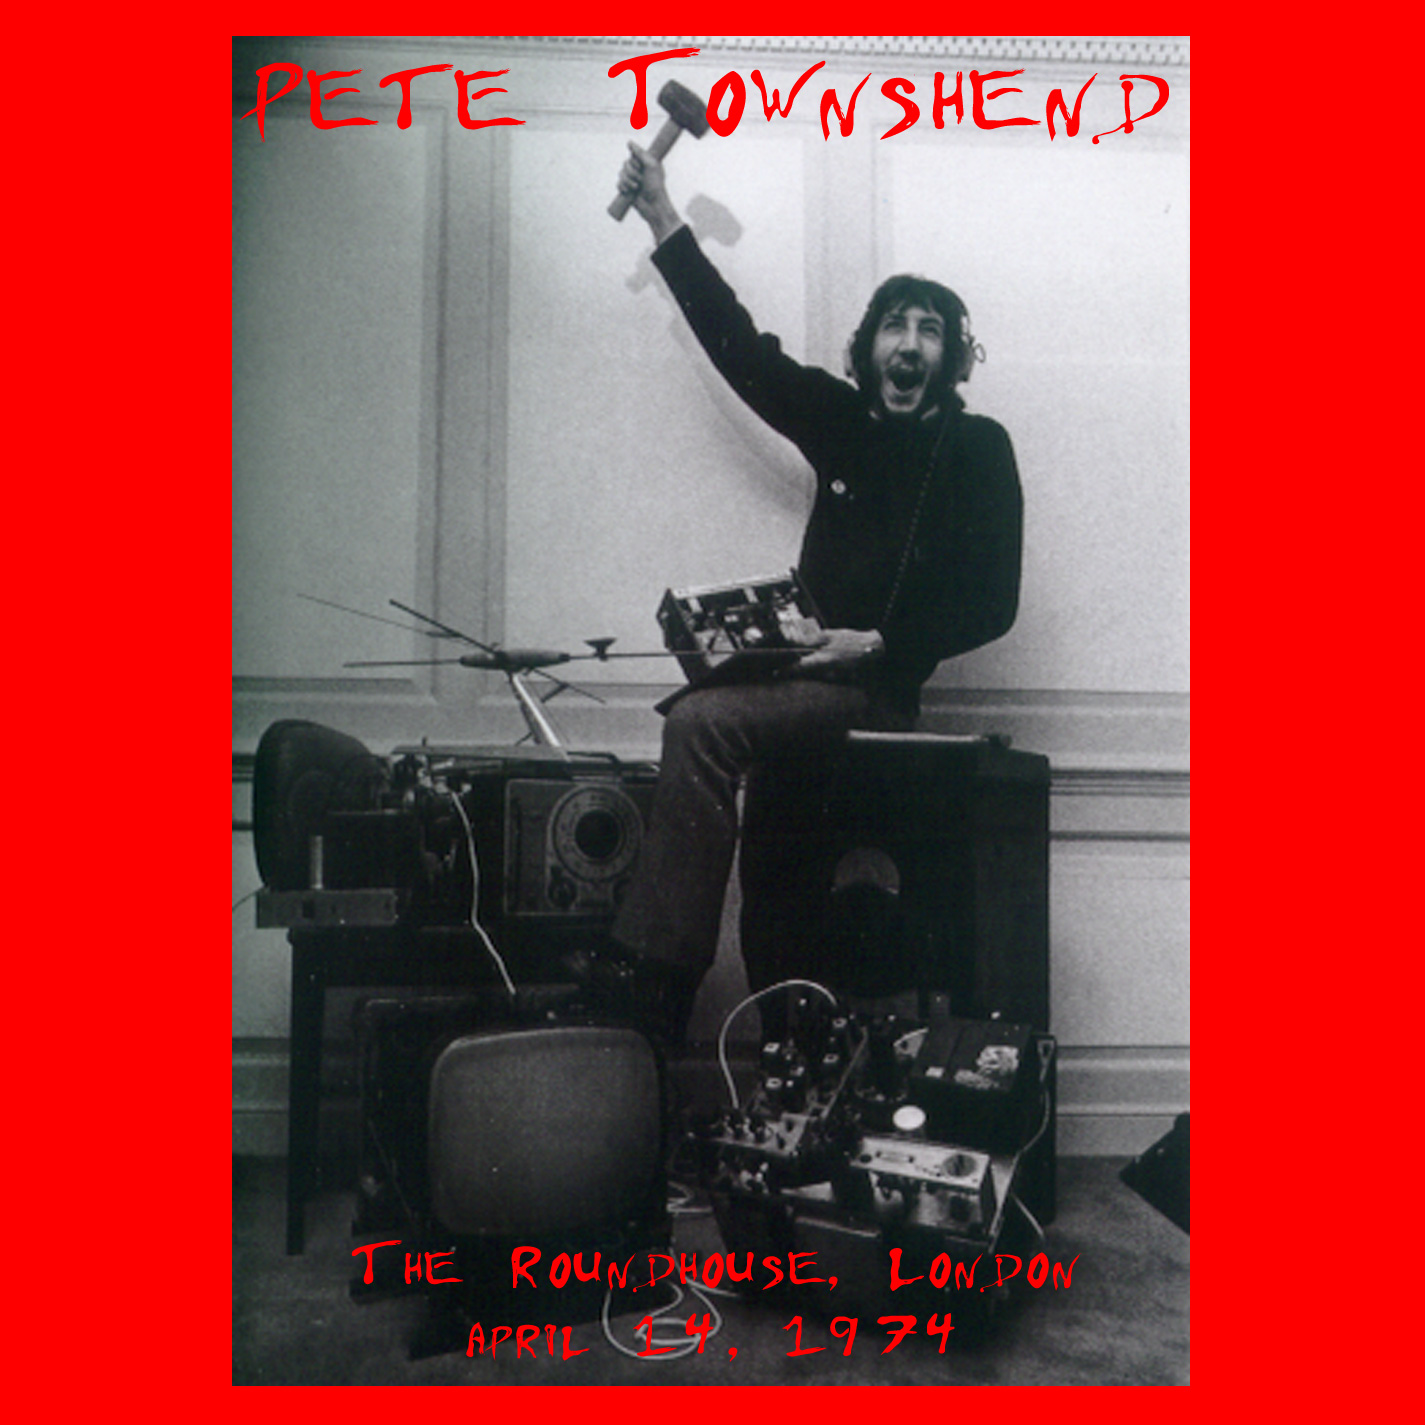 PeteTownshend1974-04-14RoundhouseLondonUK (1).jpg